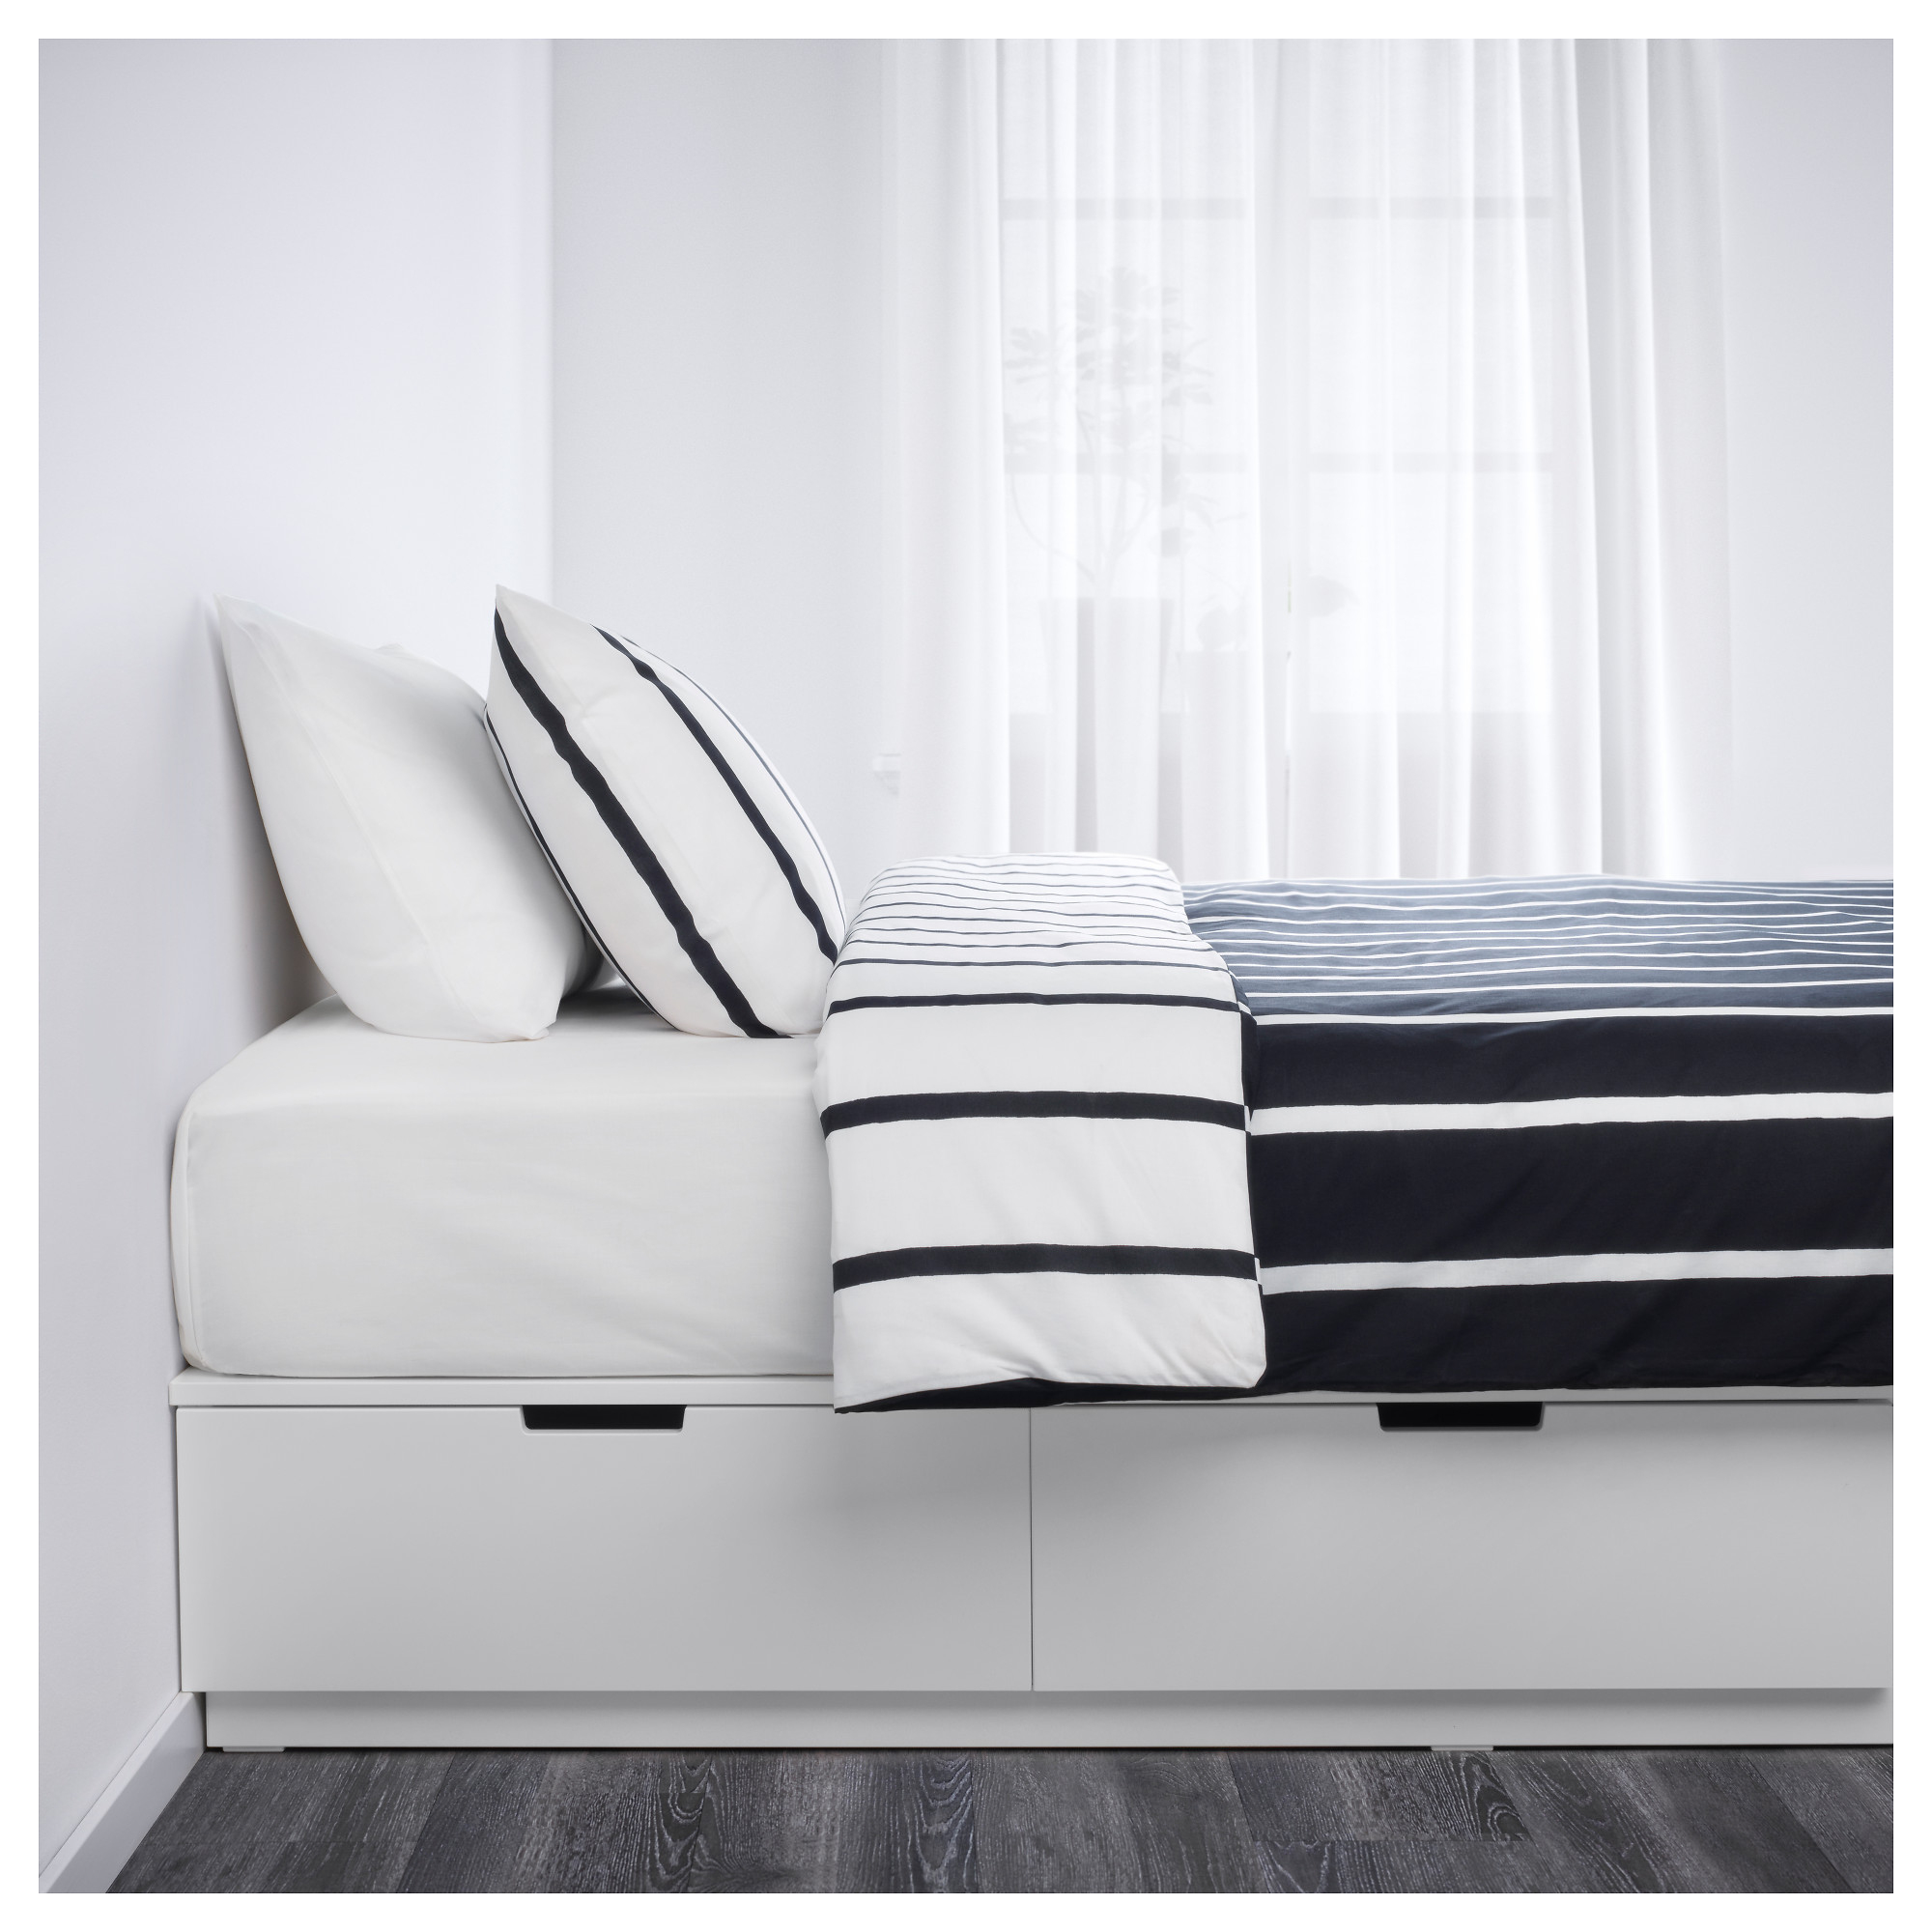 Nordli Bed Frame With Storage, White | Ikea Indonesia avec Lit Futon Ikea